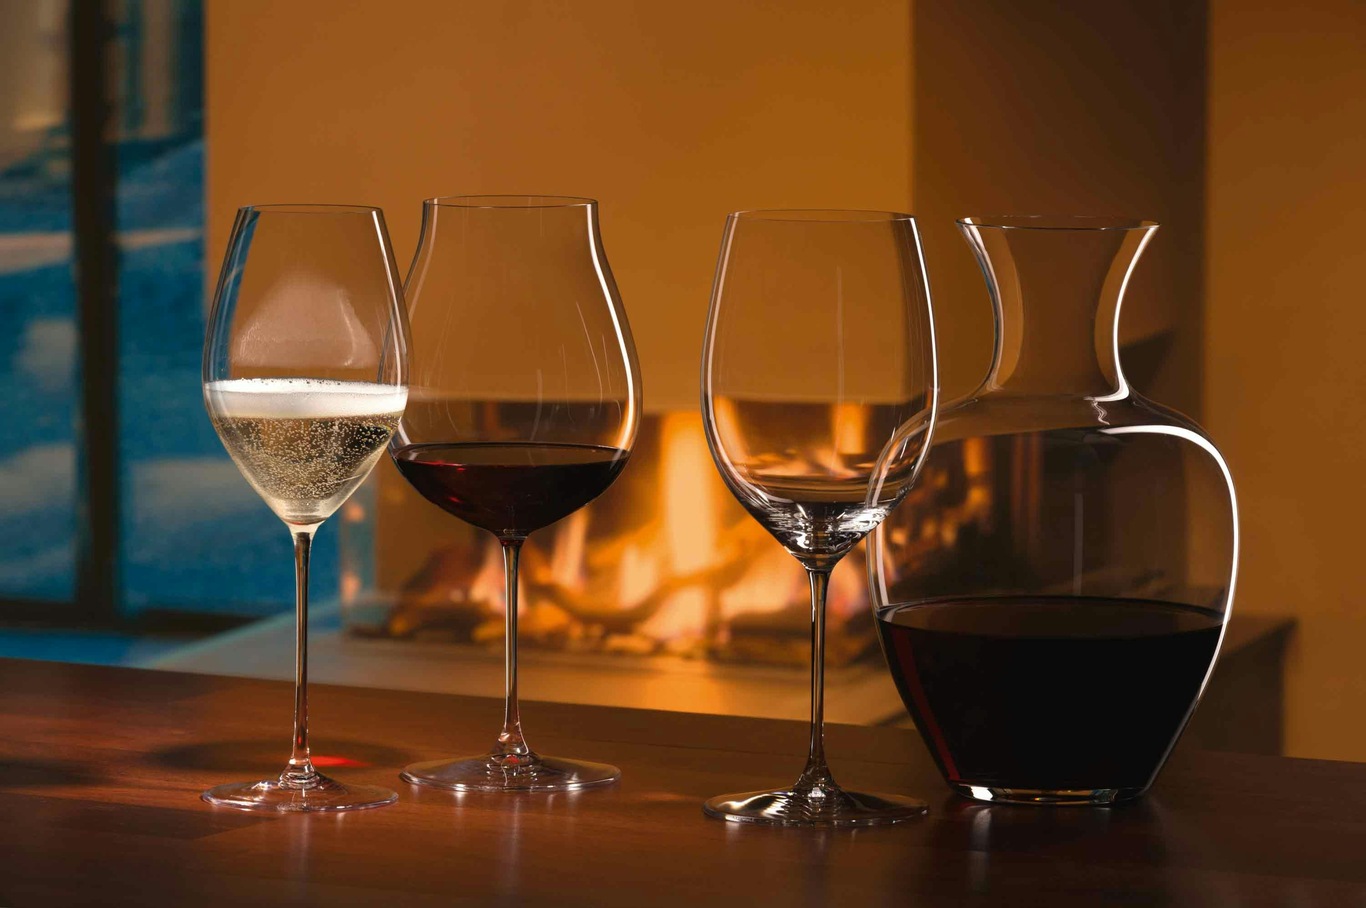 Riedel Vinum New World Pinot Noir Wine Glasses, Pair